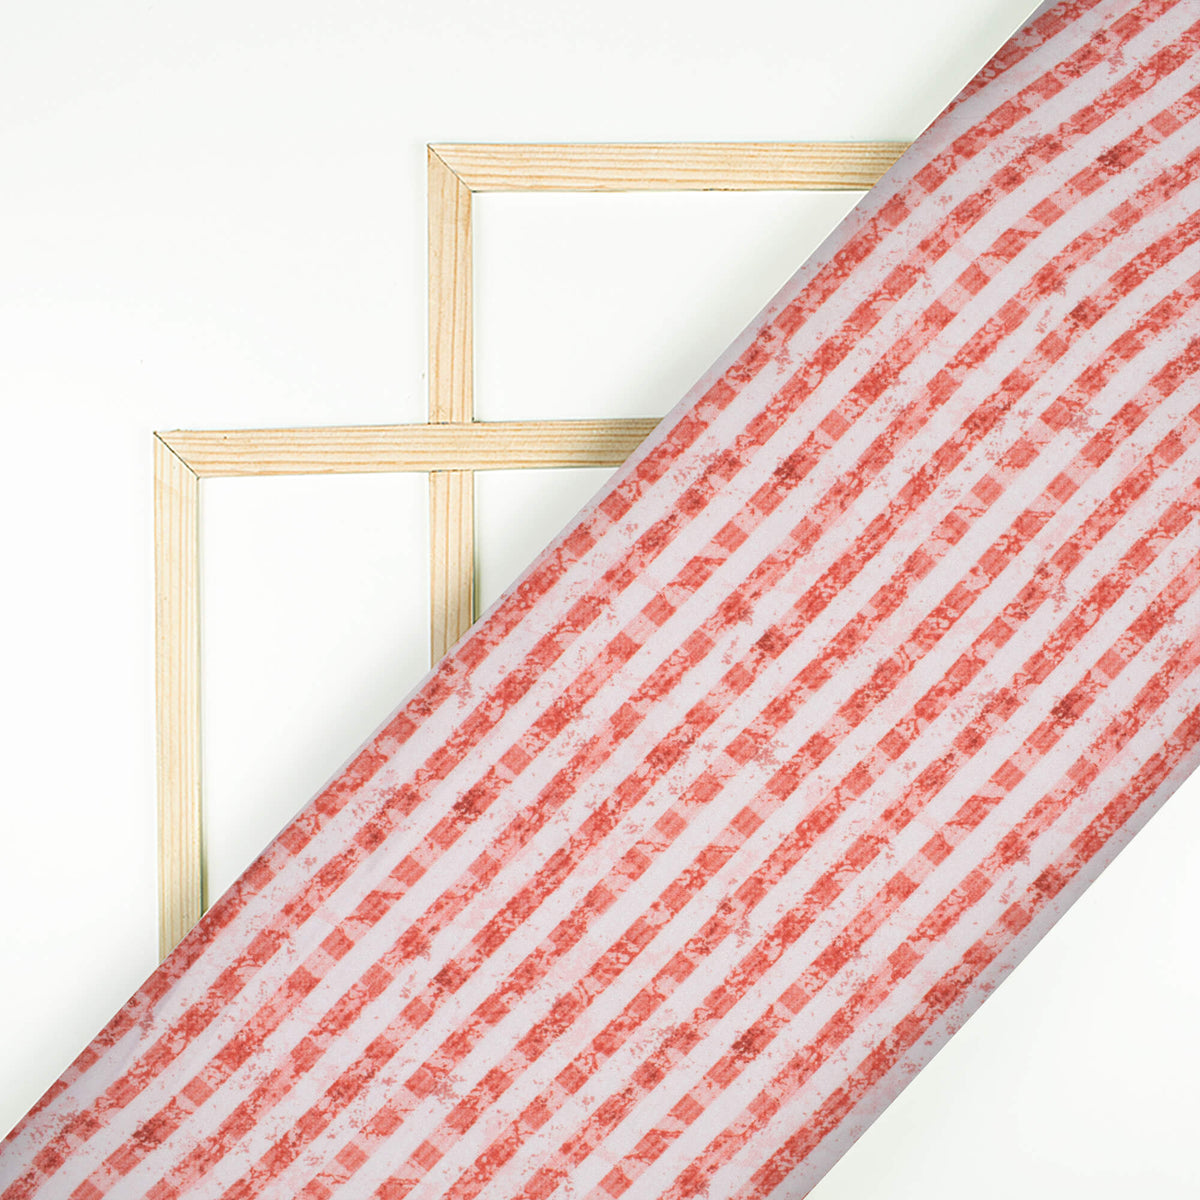 Dark Umber Orange And White Stripes Pattern Digital Print Premium Lush Satin Fabric